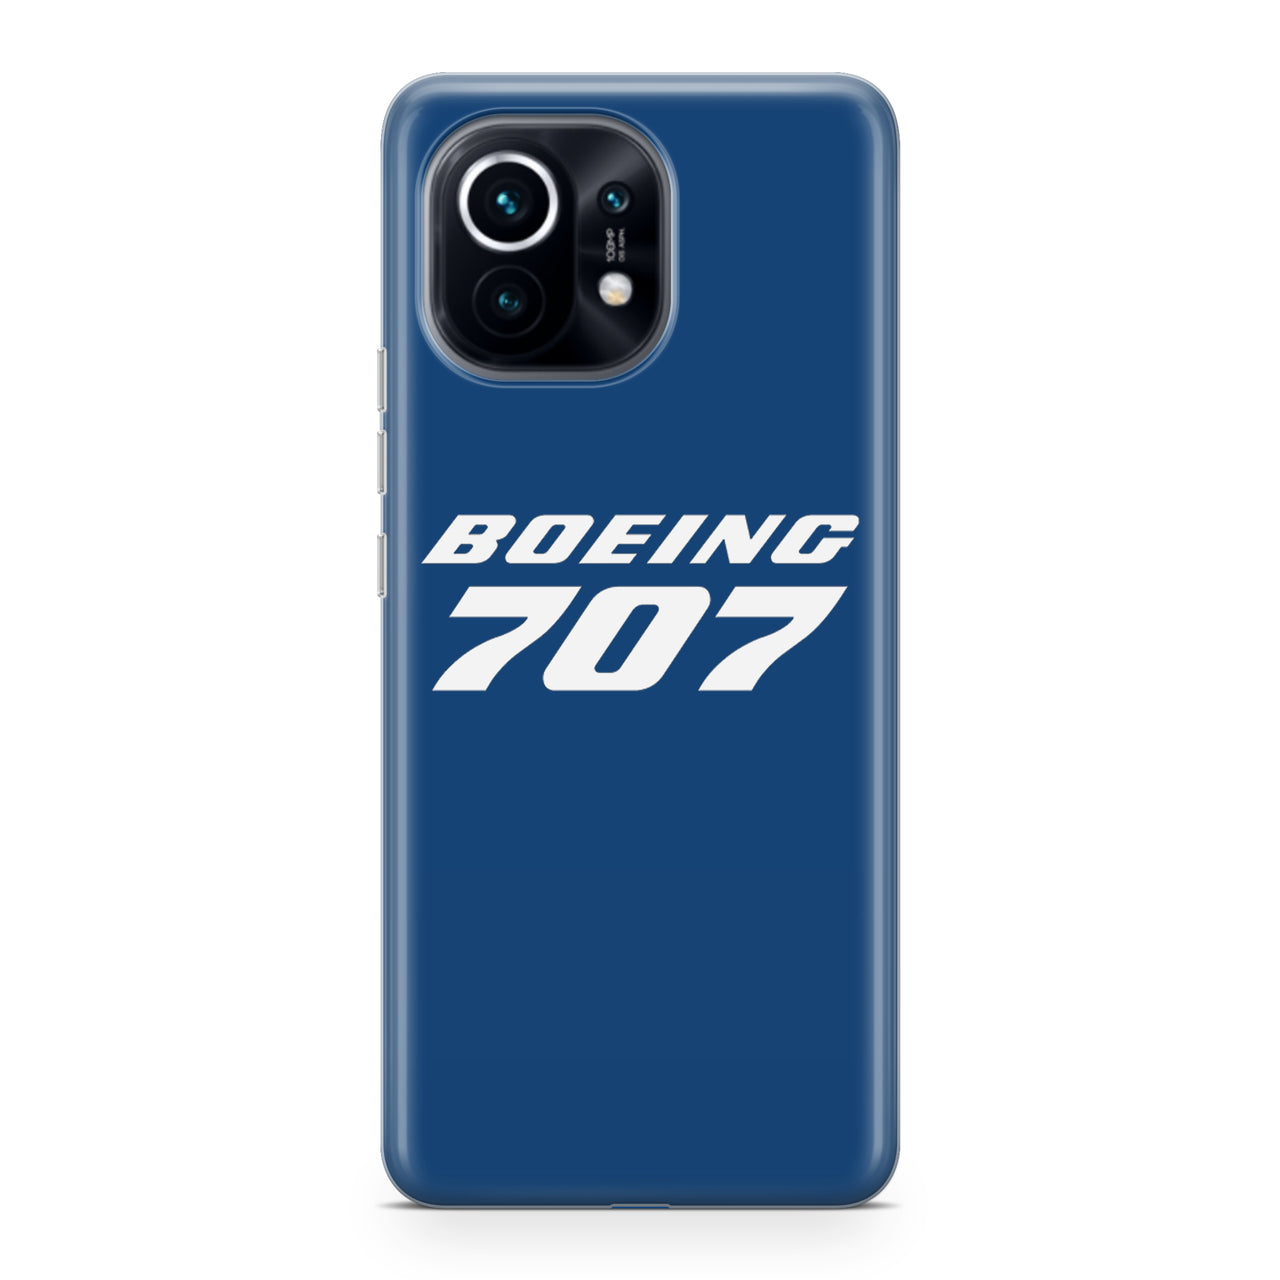 Boeing 707 & Text Designed Xiaomi Cases